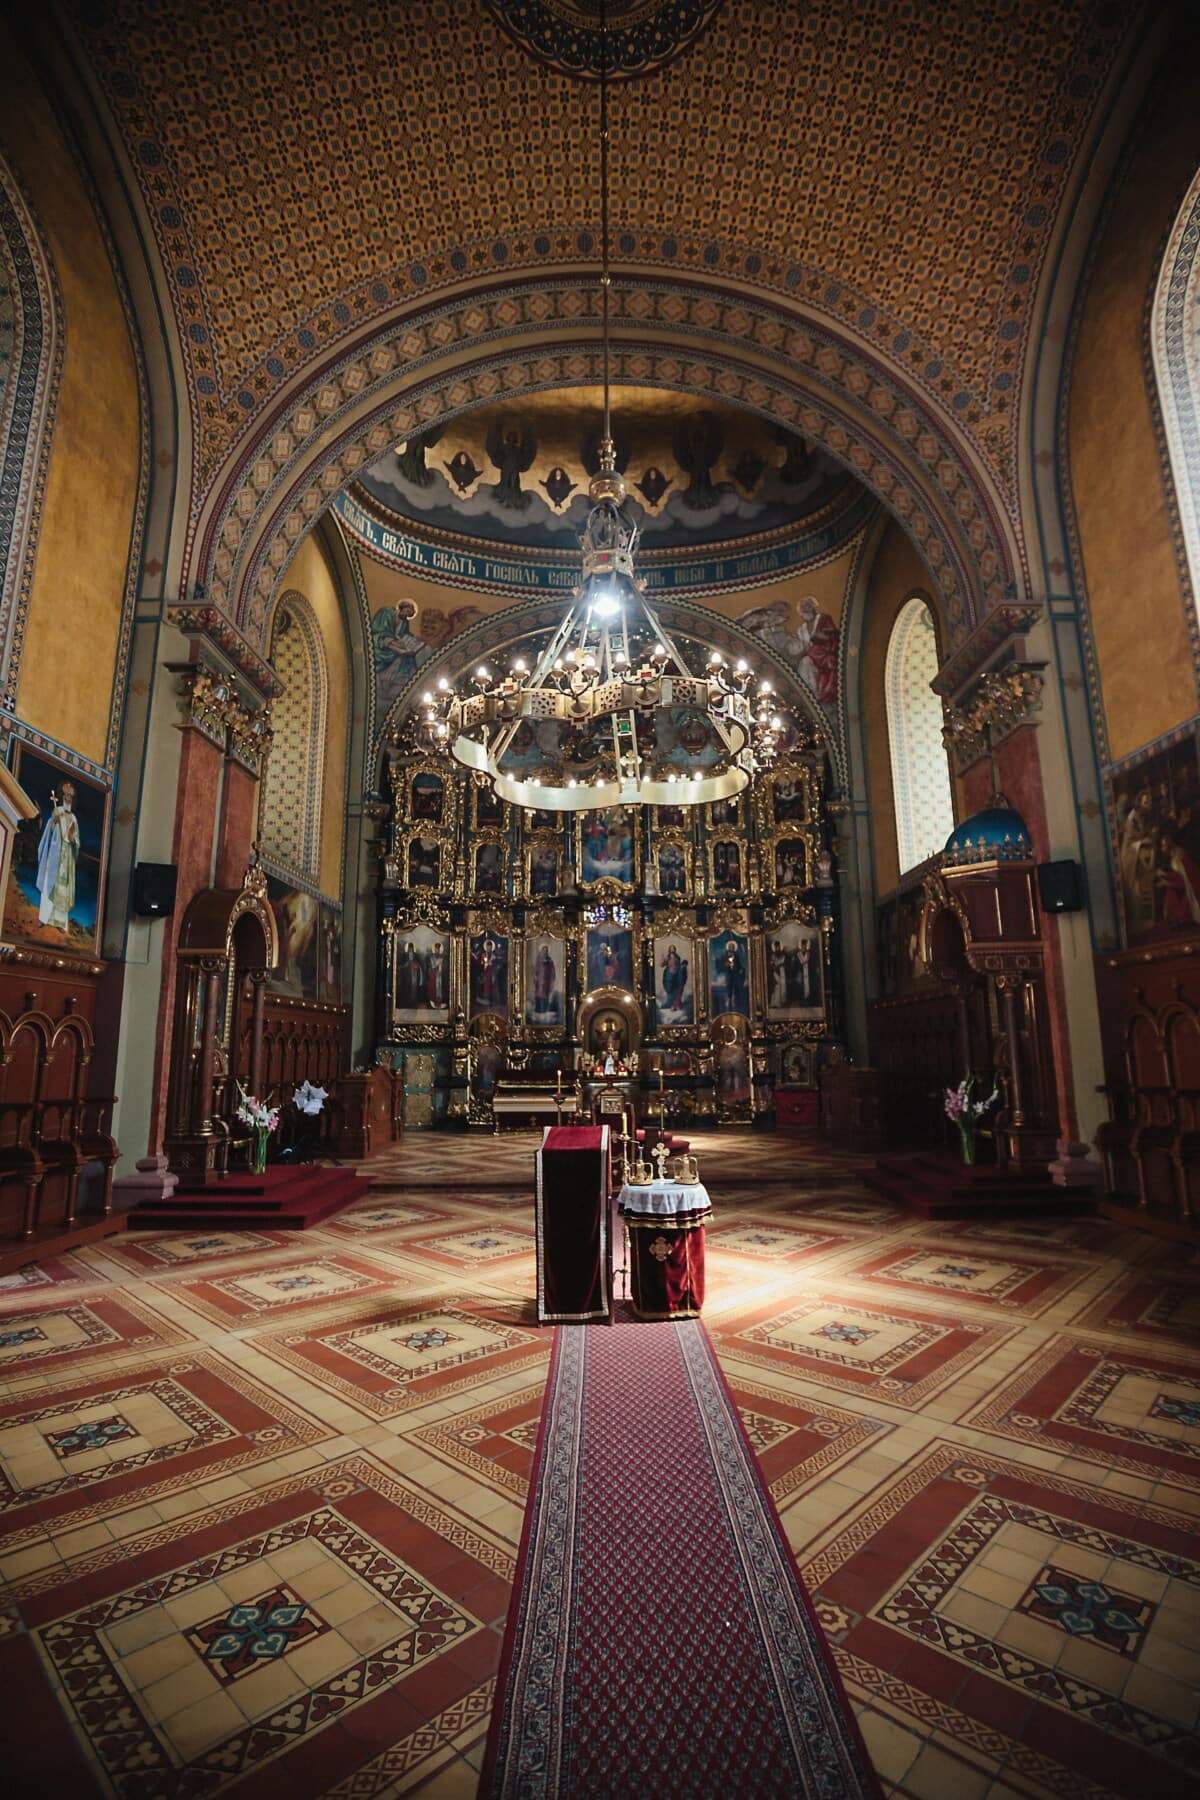 biserica, interior, covorul rosu, Altarul, candelabru, catedrala, structura, religie, arhitectura, plafon